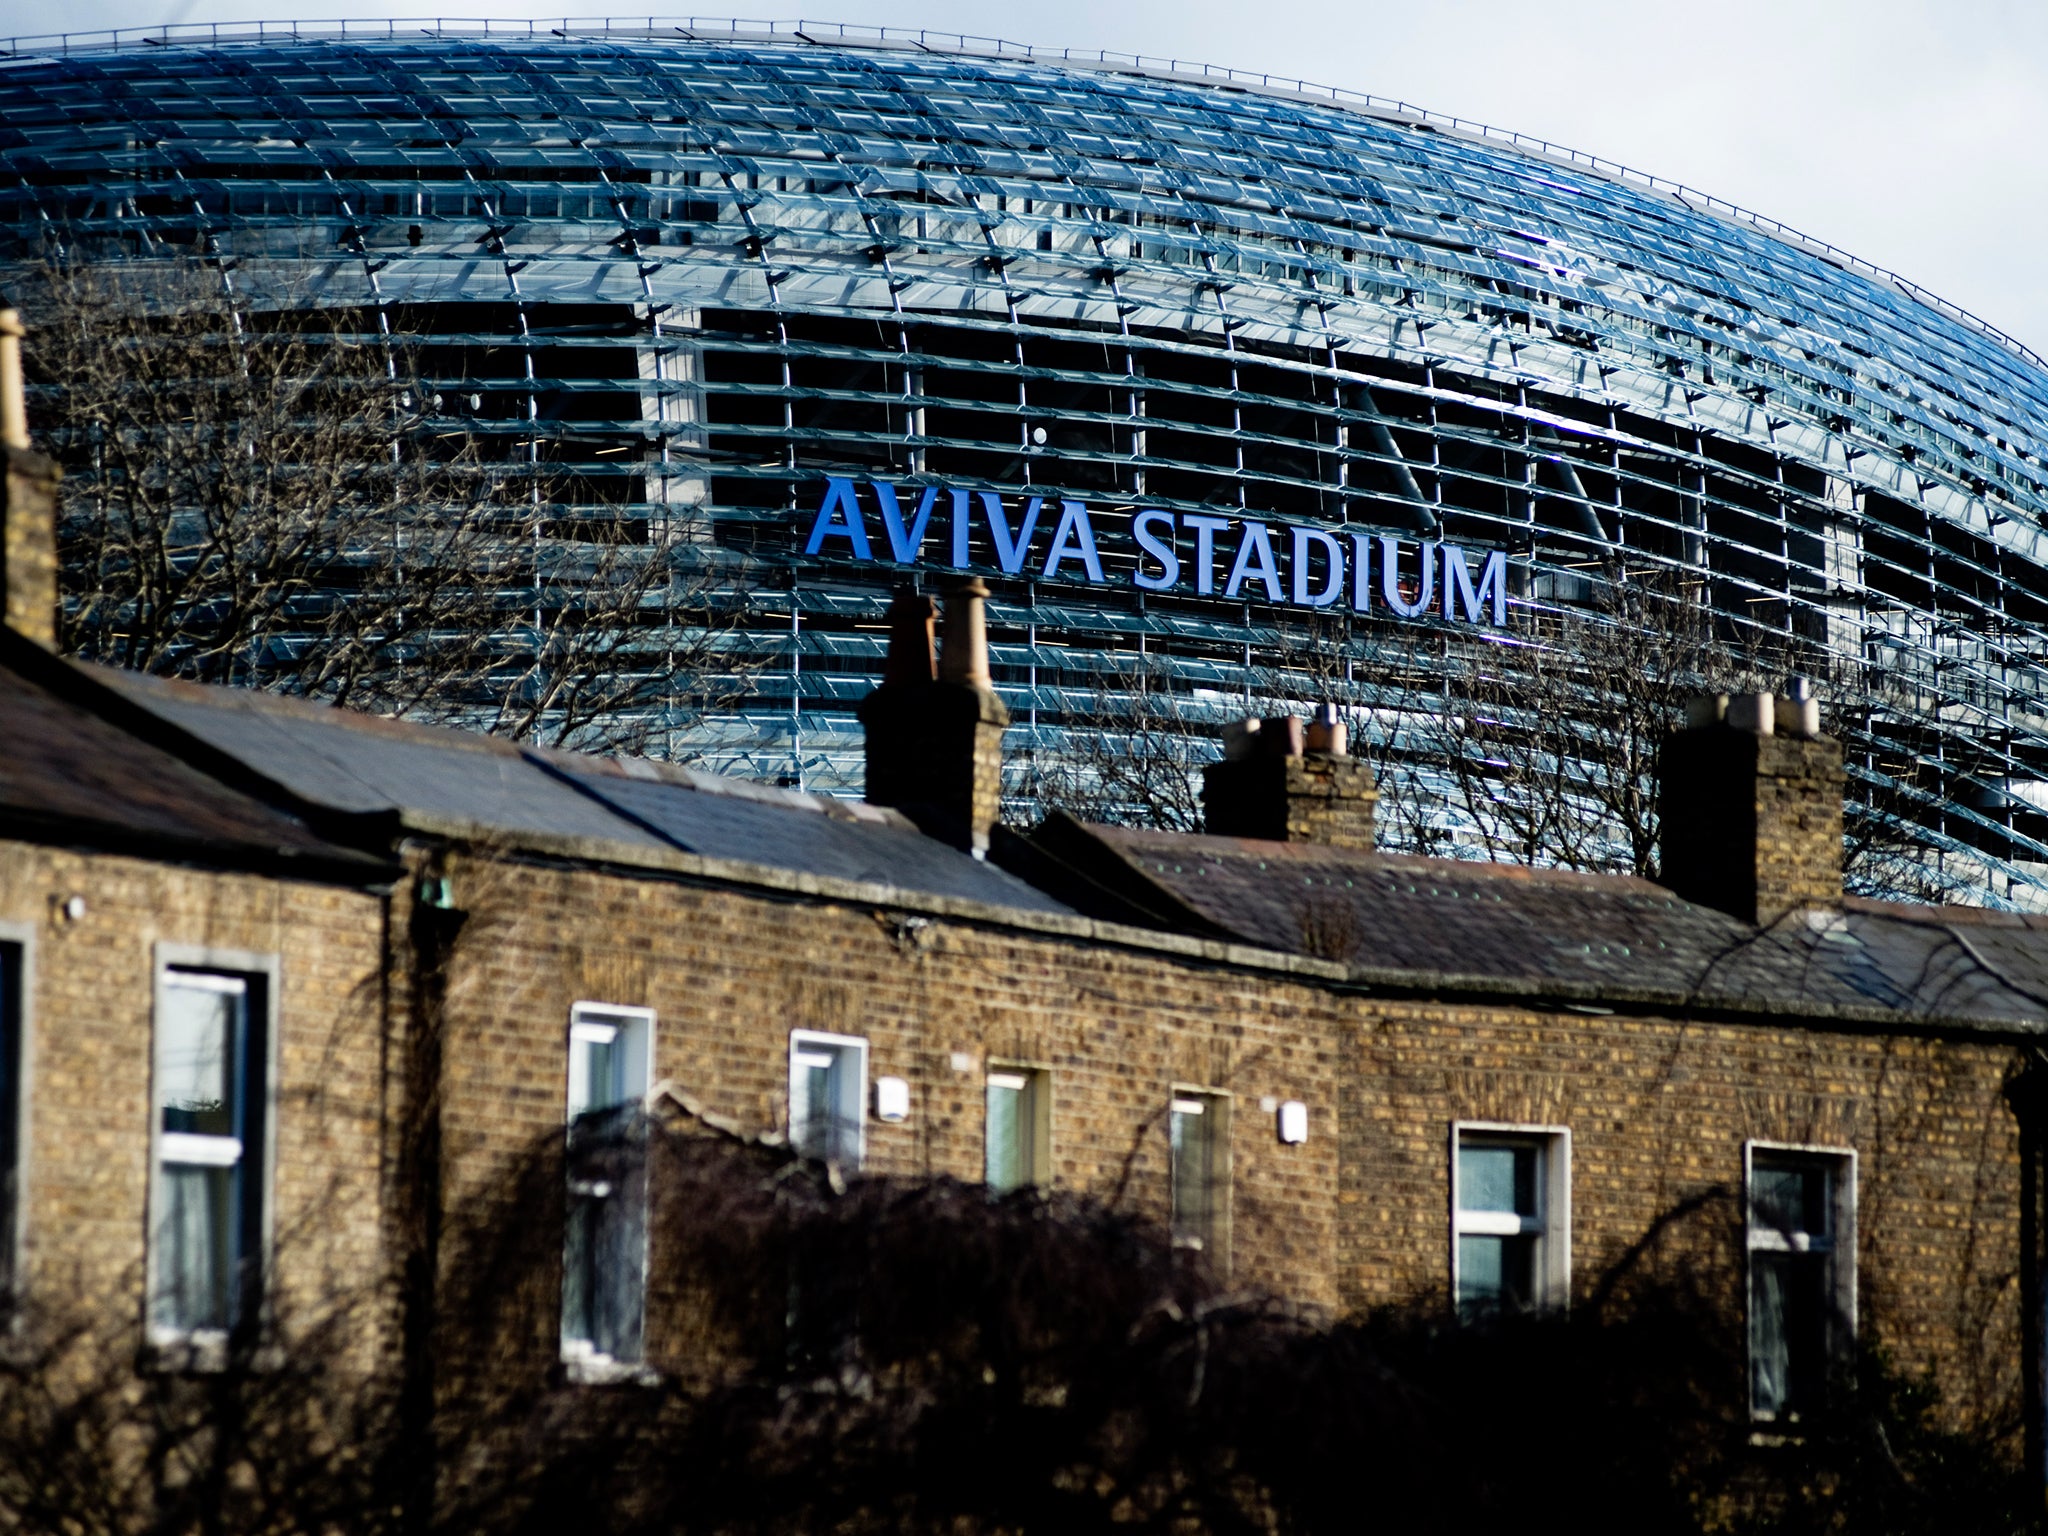 A view of the Aviva Stadium